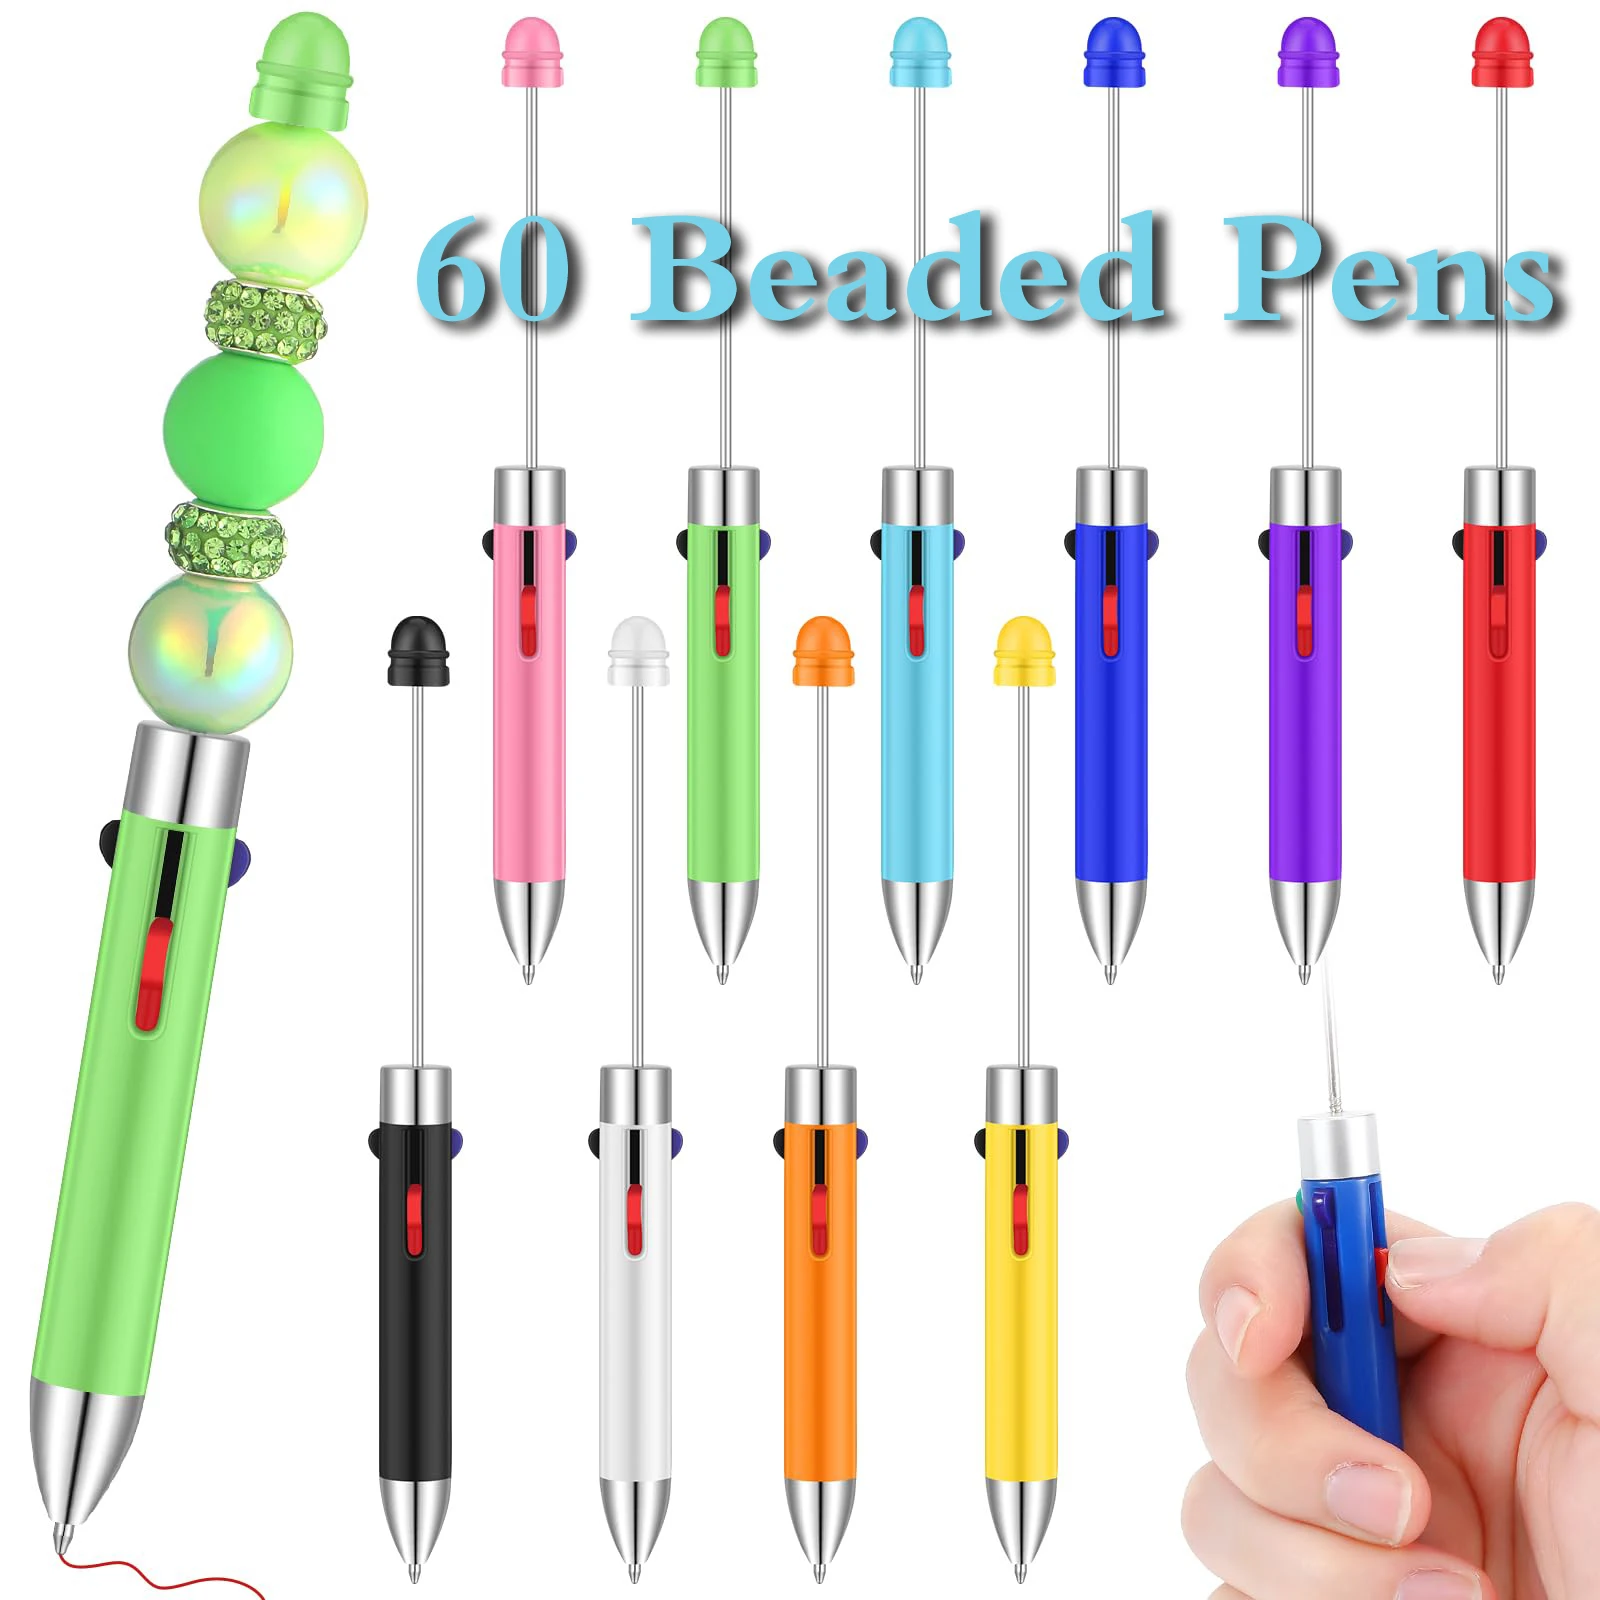 

60pcs New 4-color Refill Beaded Ballpoint Pen DIY Beadable Pens Student Stationery Plastic Gift Pen School Office Pen Supplies